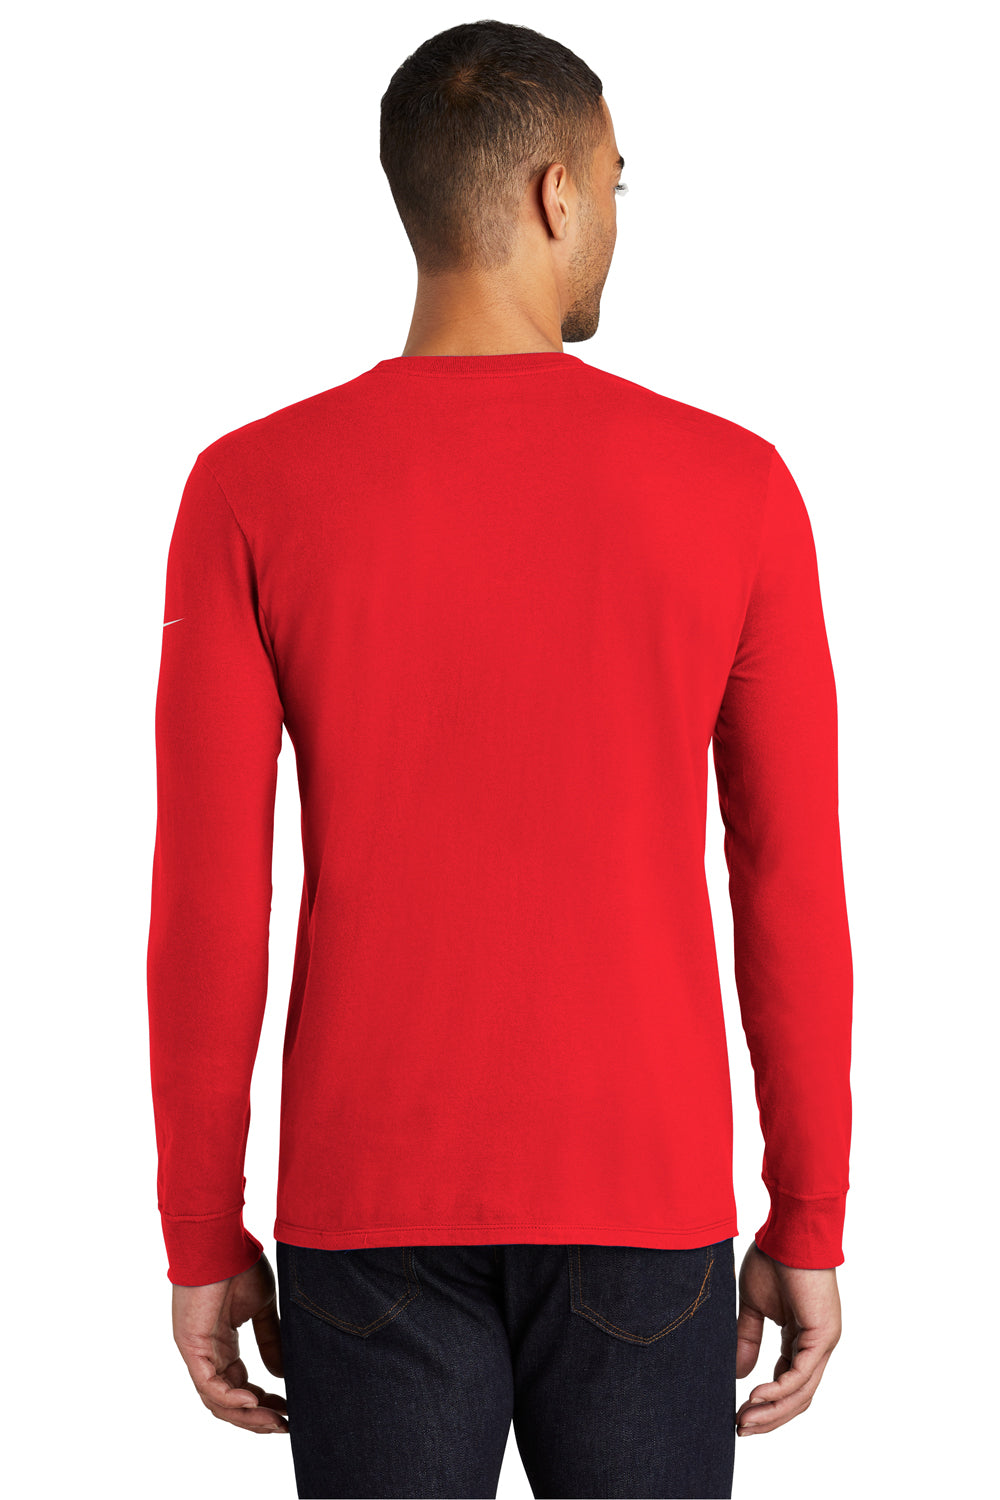 Nike NKBQ5232 Mens Core Long Sleeve Crewneck T-Shirt Red Back